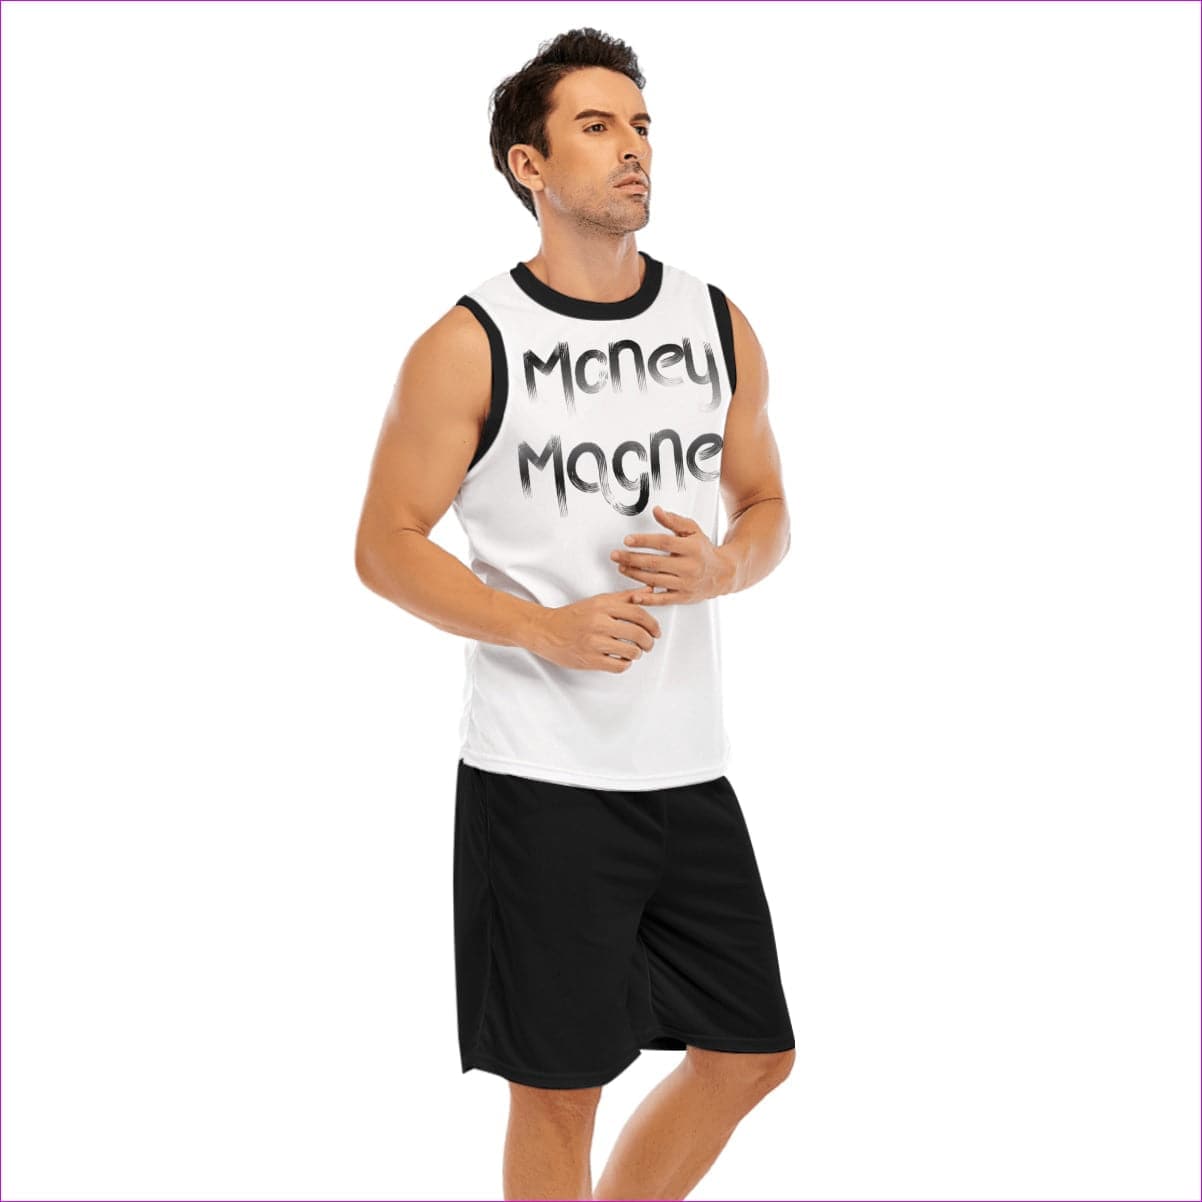 Money Magnet 2 Men's Basketball Clothing Set - men's top & short set at TFC&H Co.